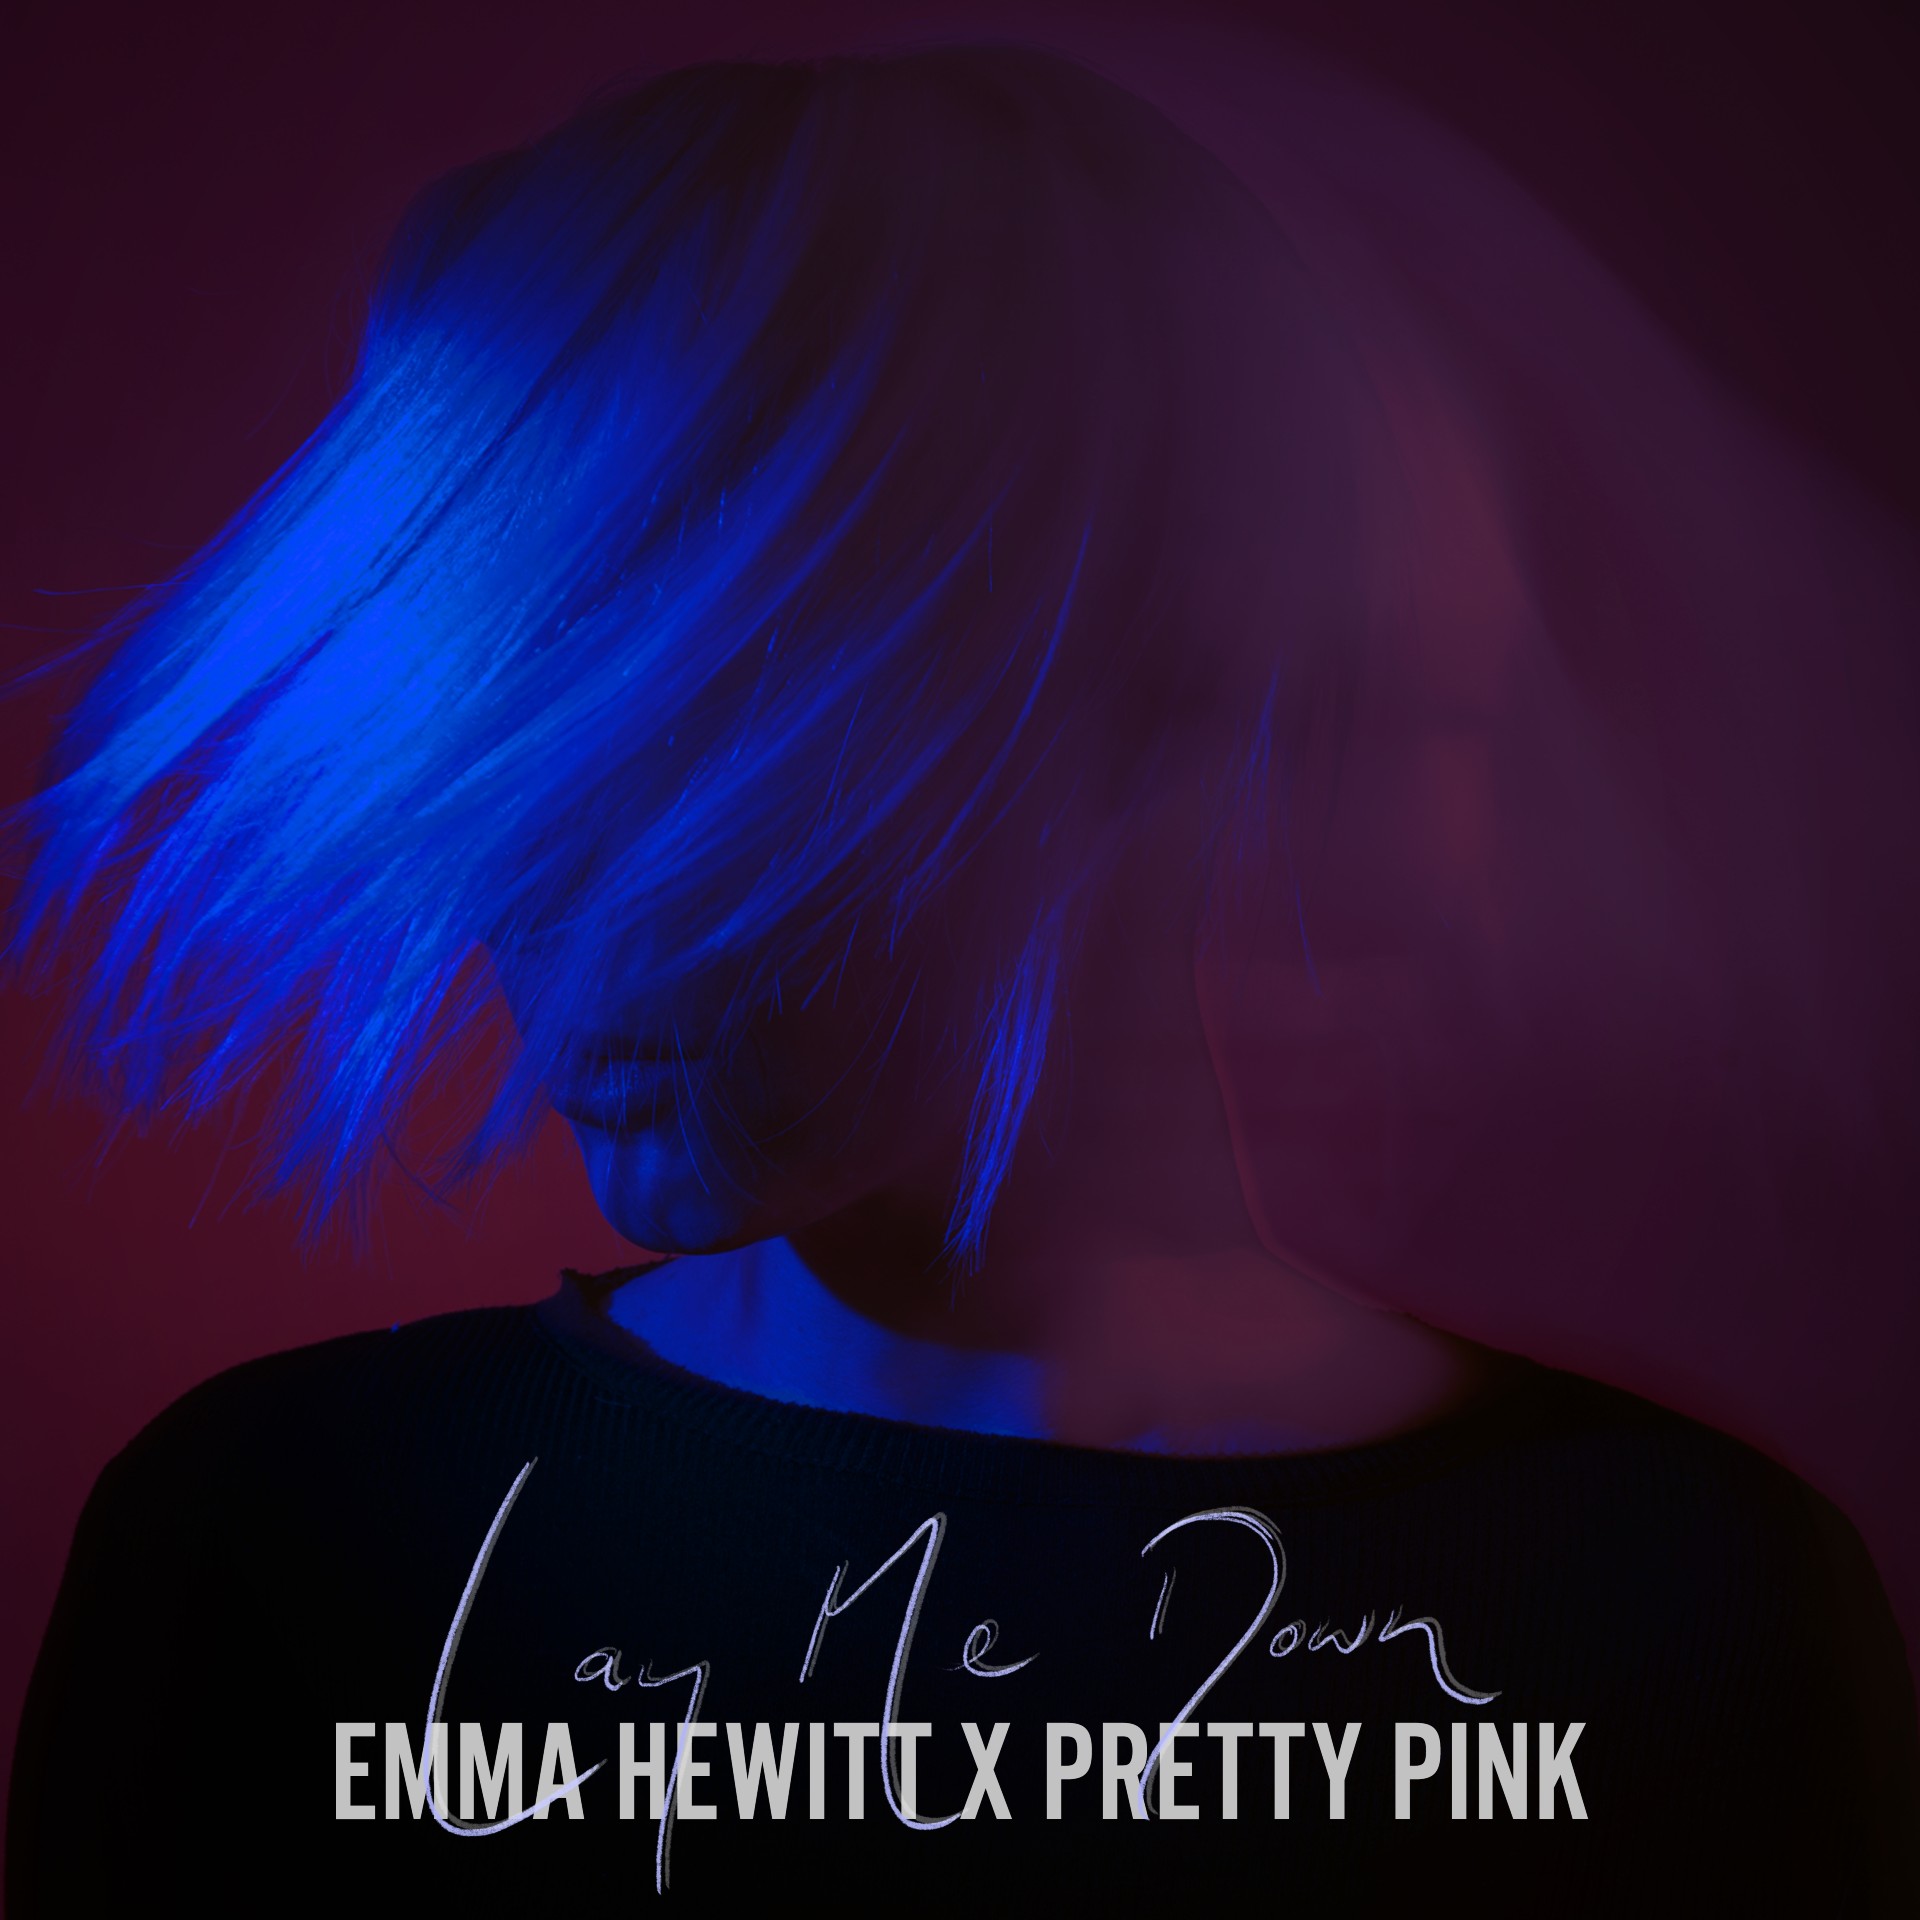 Emma Hewitt x Pretty Pink presents Lay Me Down on Black Hole Recordings